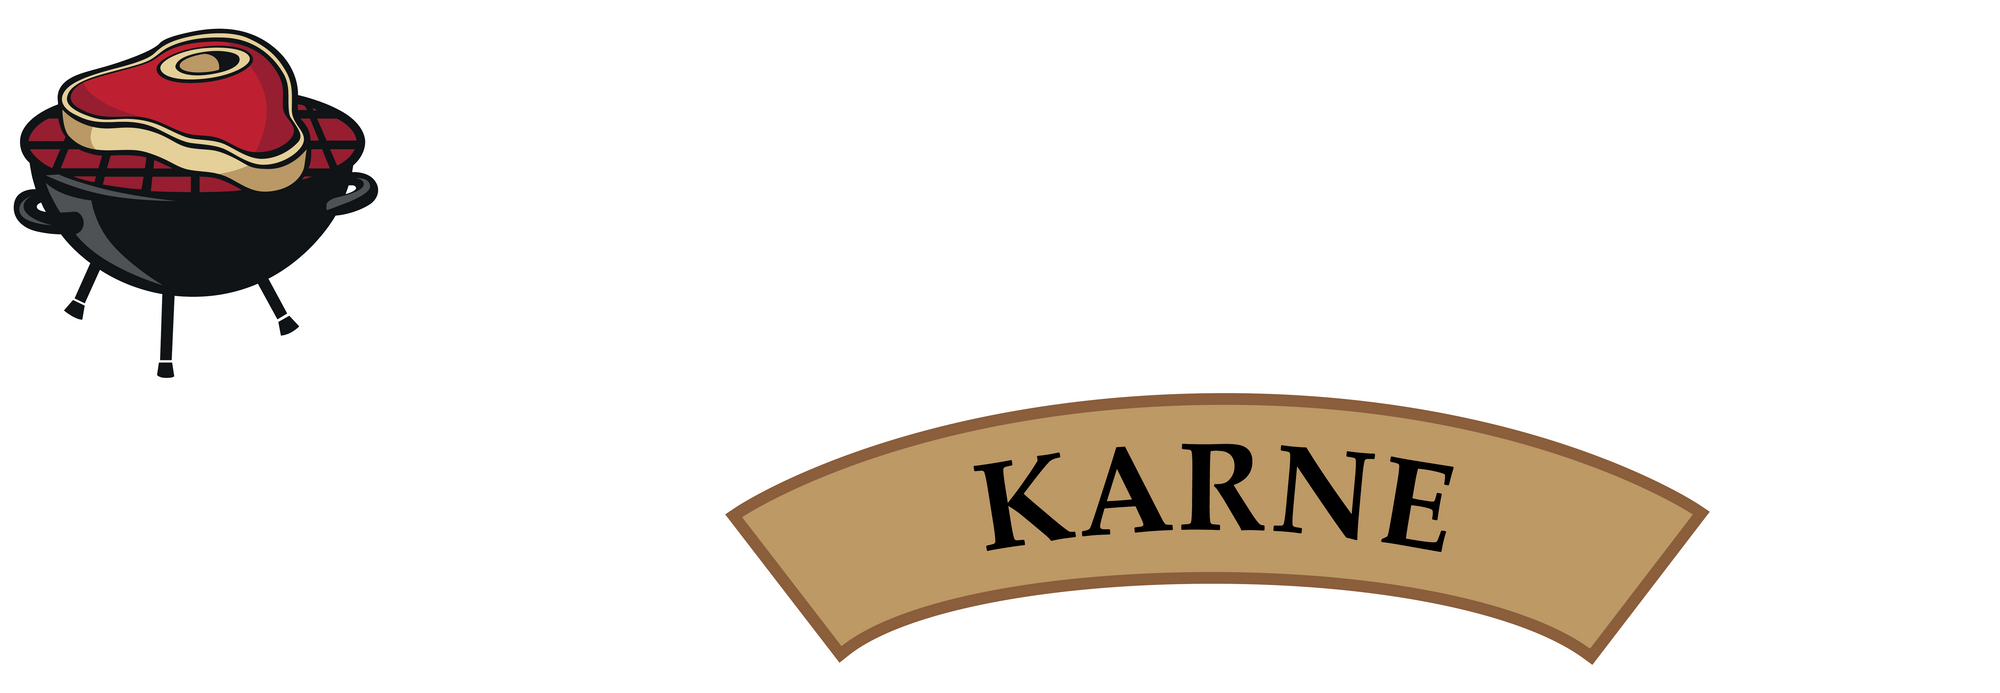 Kennedy's Karne